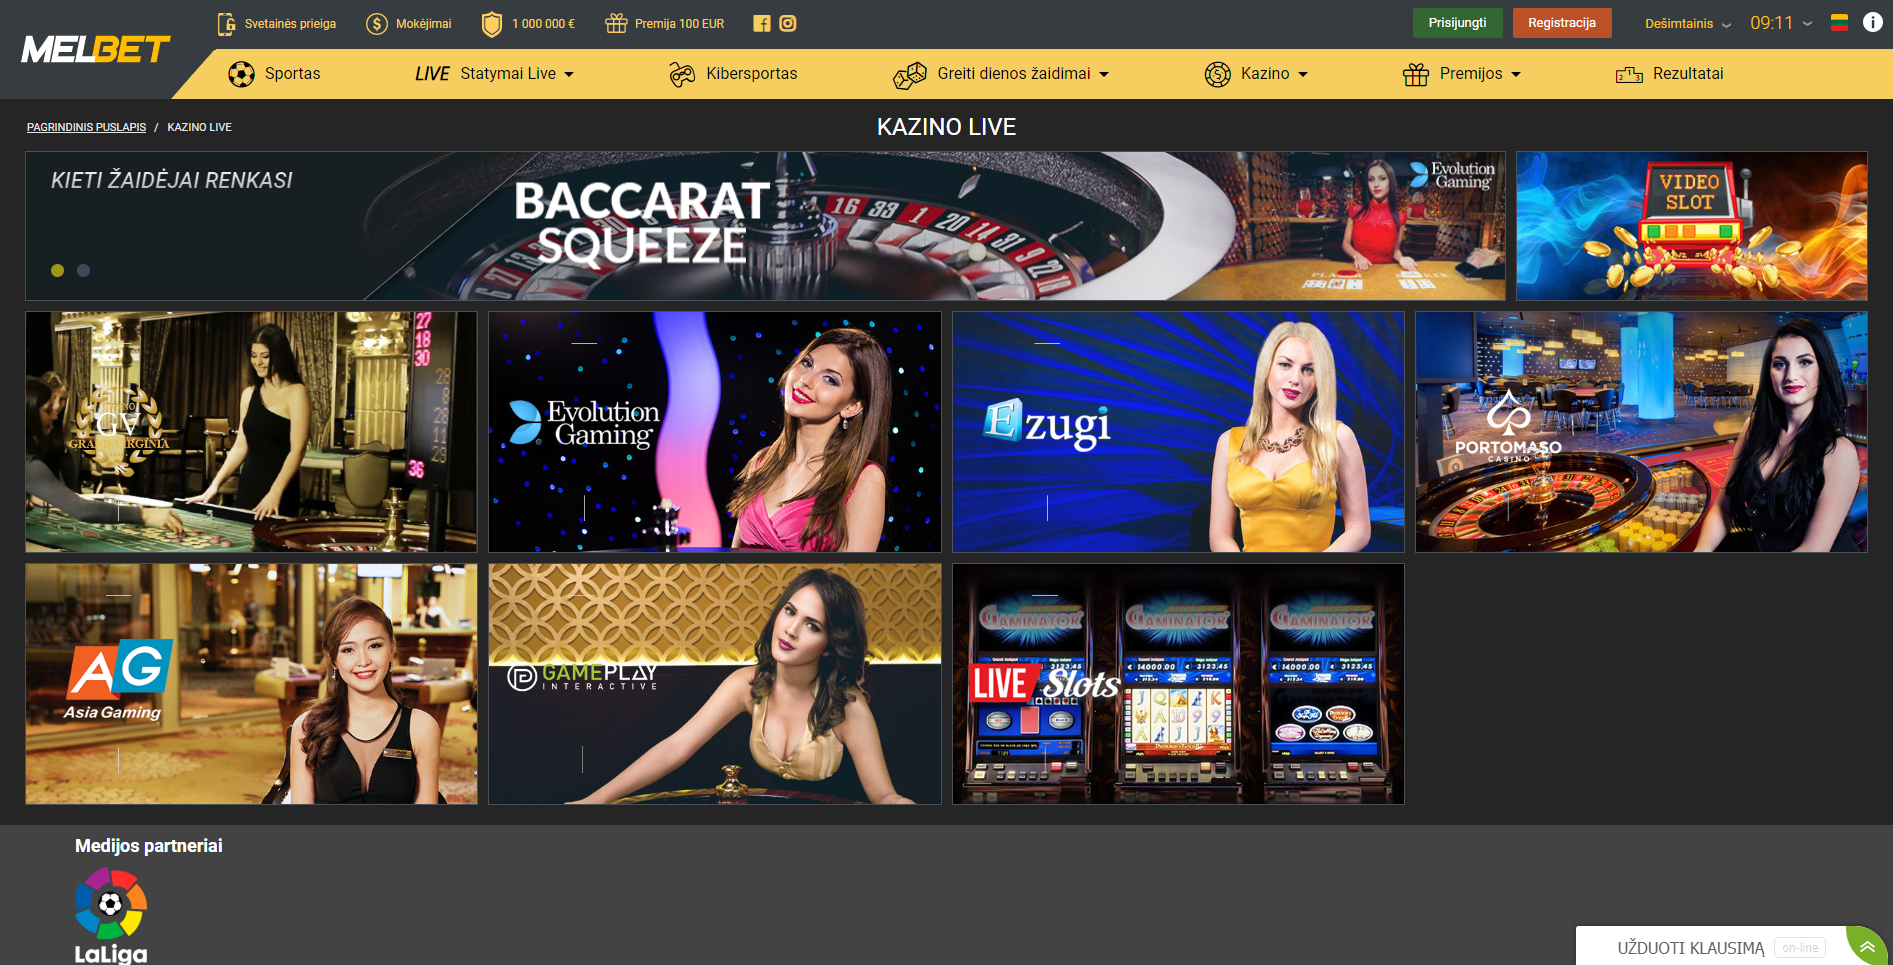 melbet live casino evolution gaming ezugi portomaso asiagaming live dealers roulette live slots